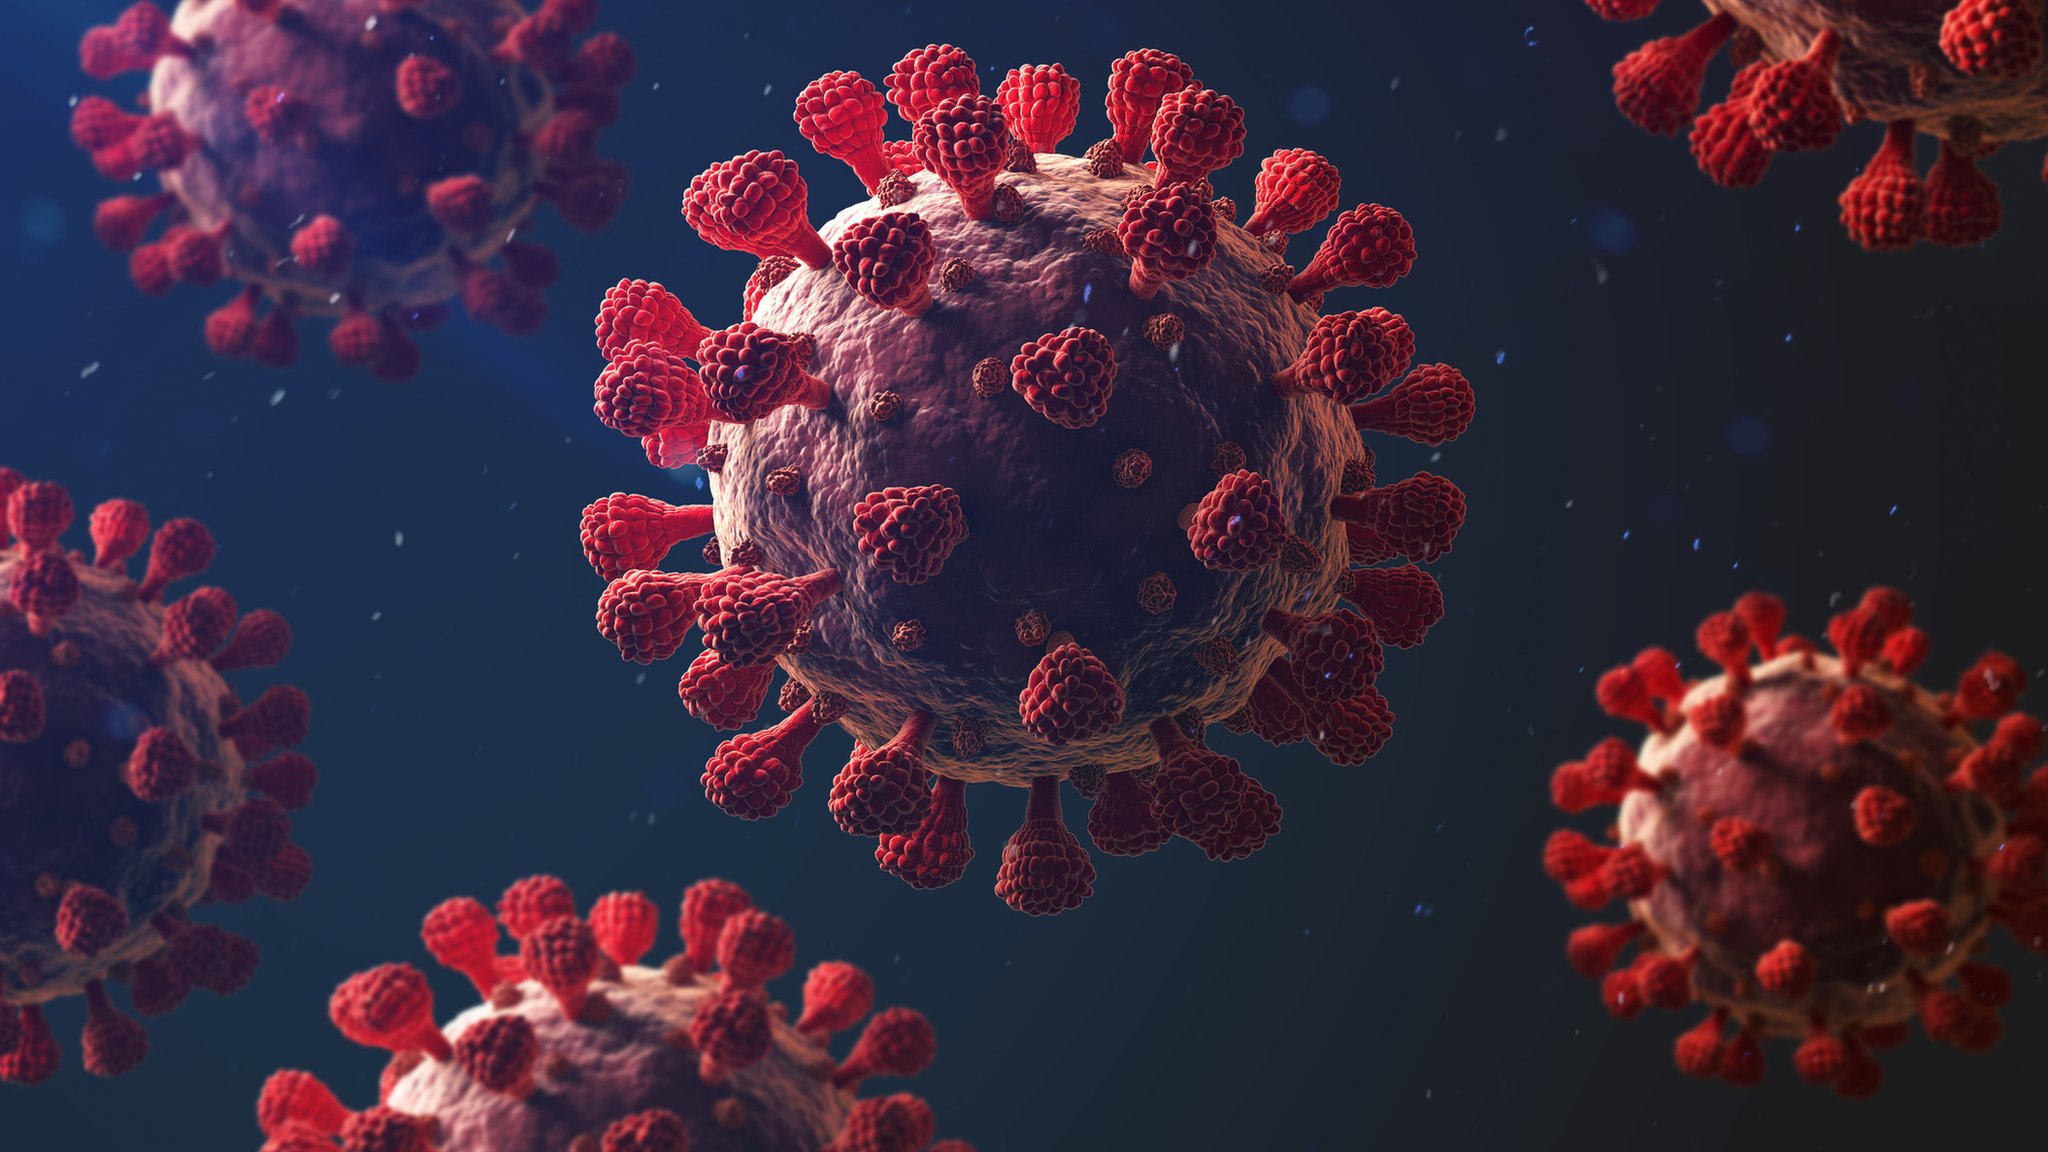 Covid: Why is coronavirus such a threat? - BBC News